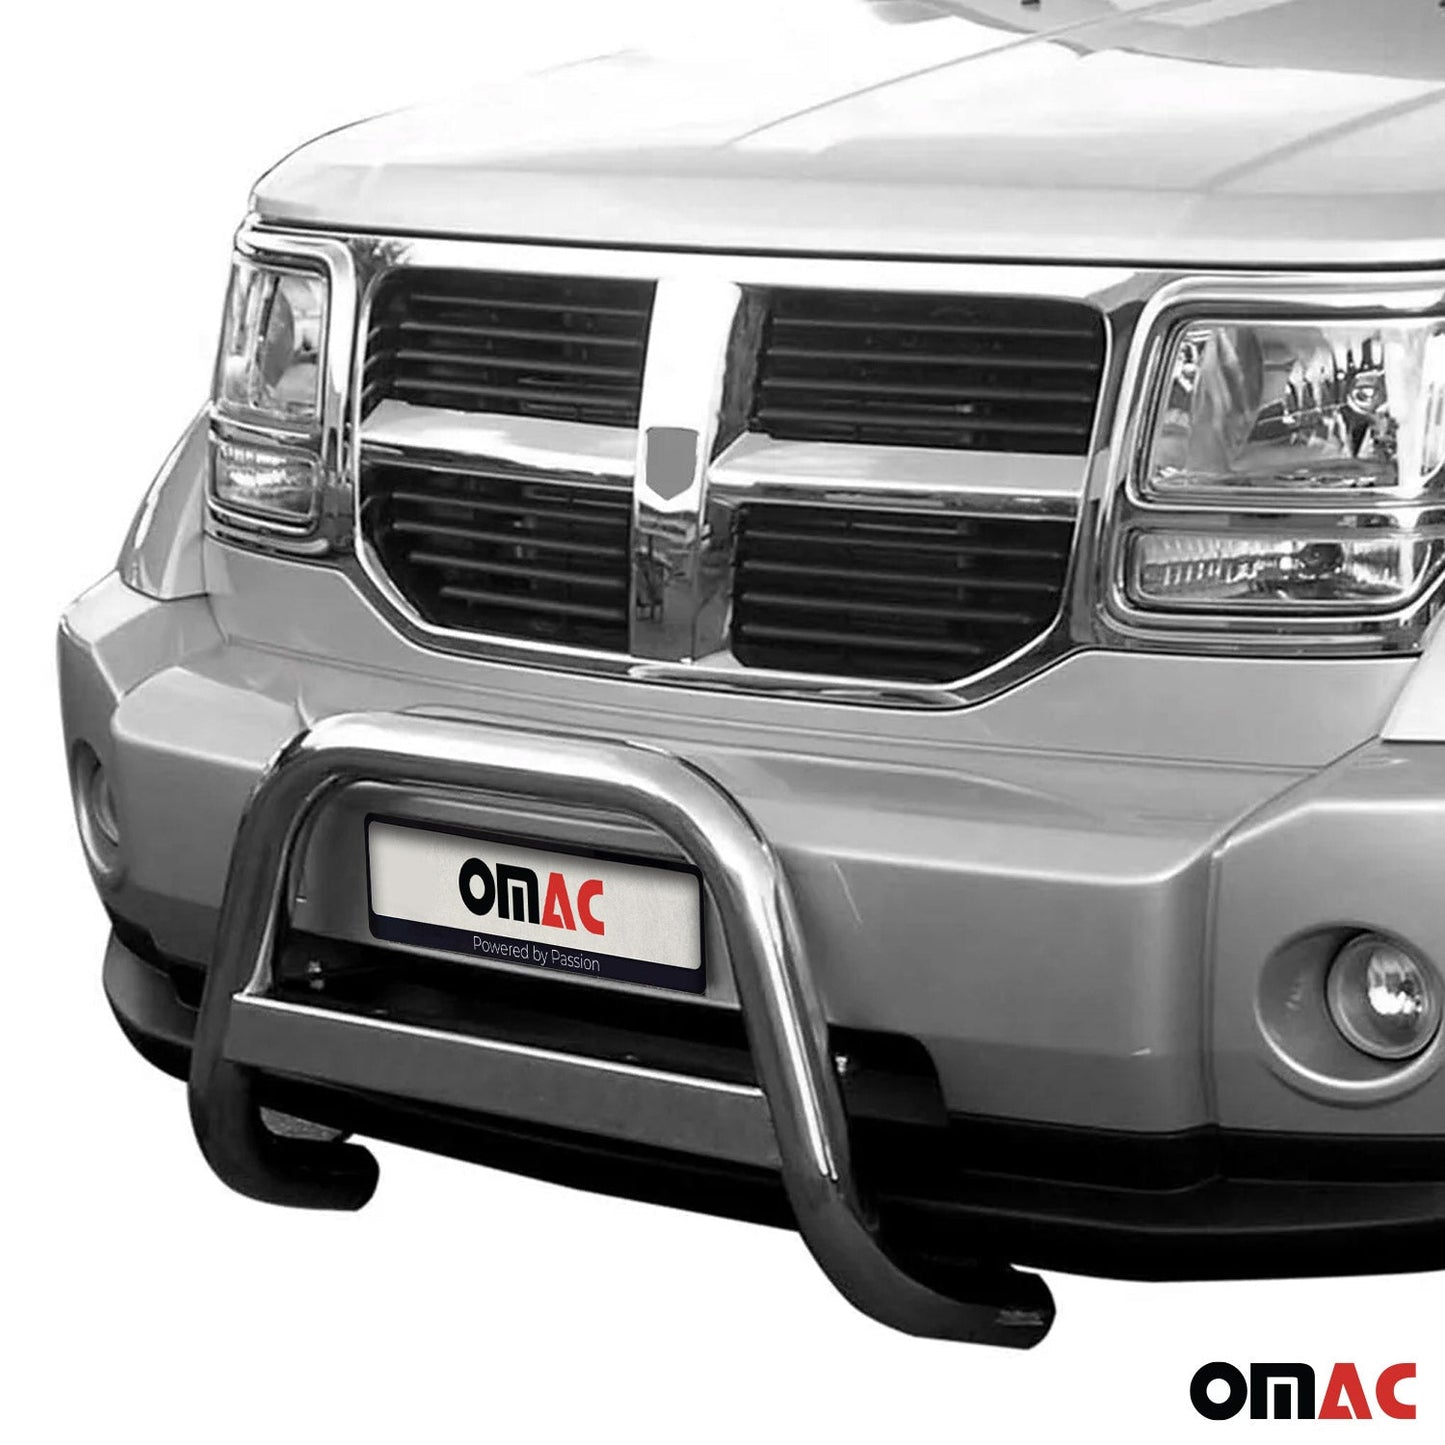 OMAC Bull Bar Push Front Bumper Grille for Dodge Nitro 2007-2012 Silver 1 Pc 2401MSBB066